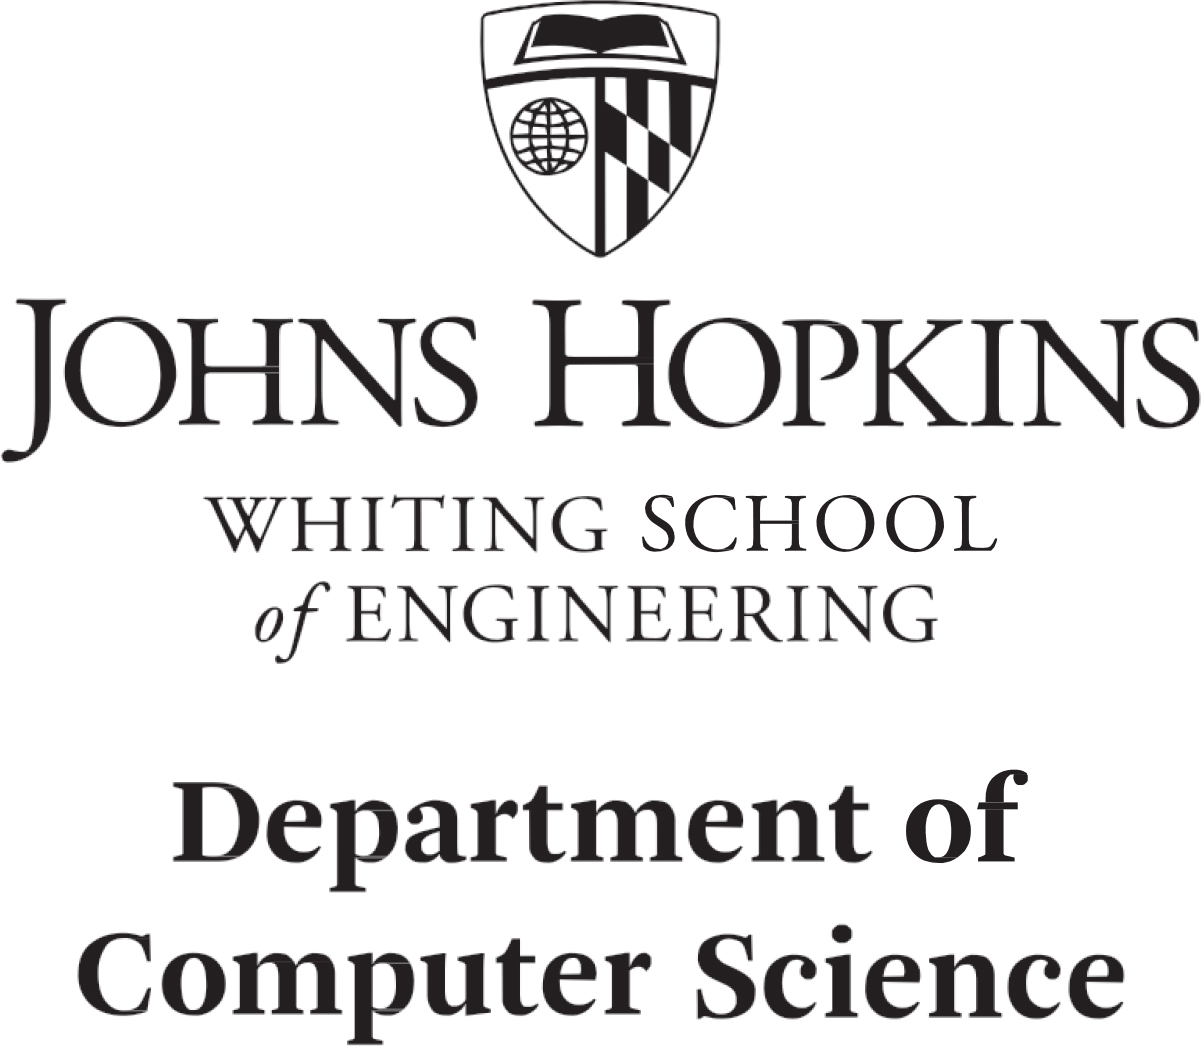 Johns Hopkins University Department of Computer Science